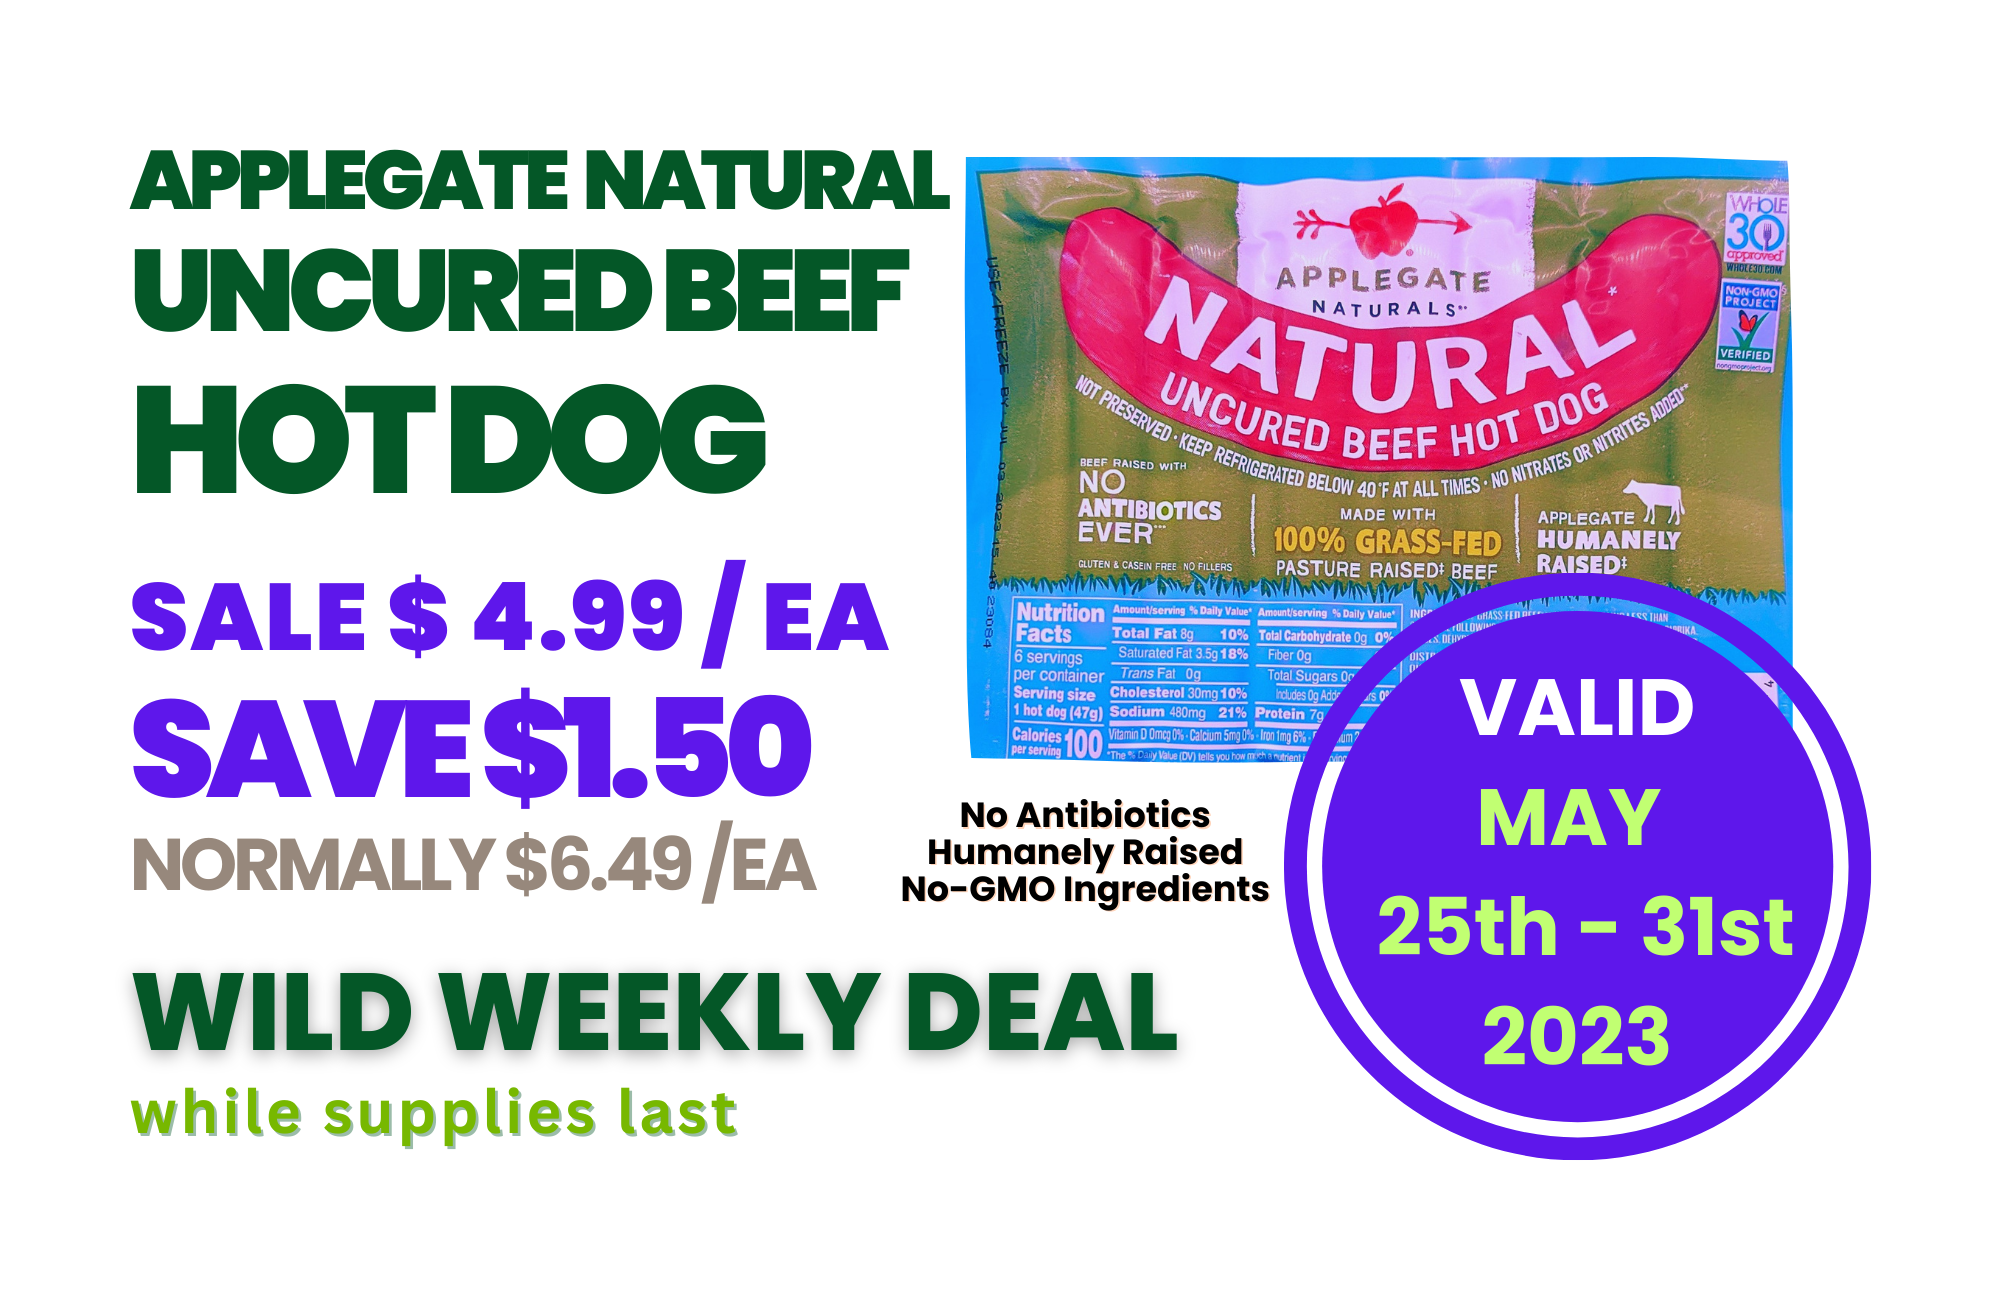 2023-0525-0531 Wild Weekend Deals Applegate Natural Uncured Beef Hot Dog.png